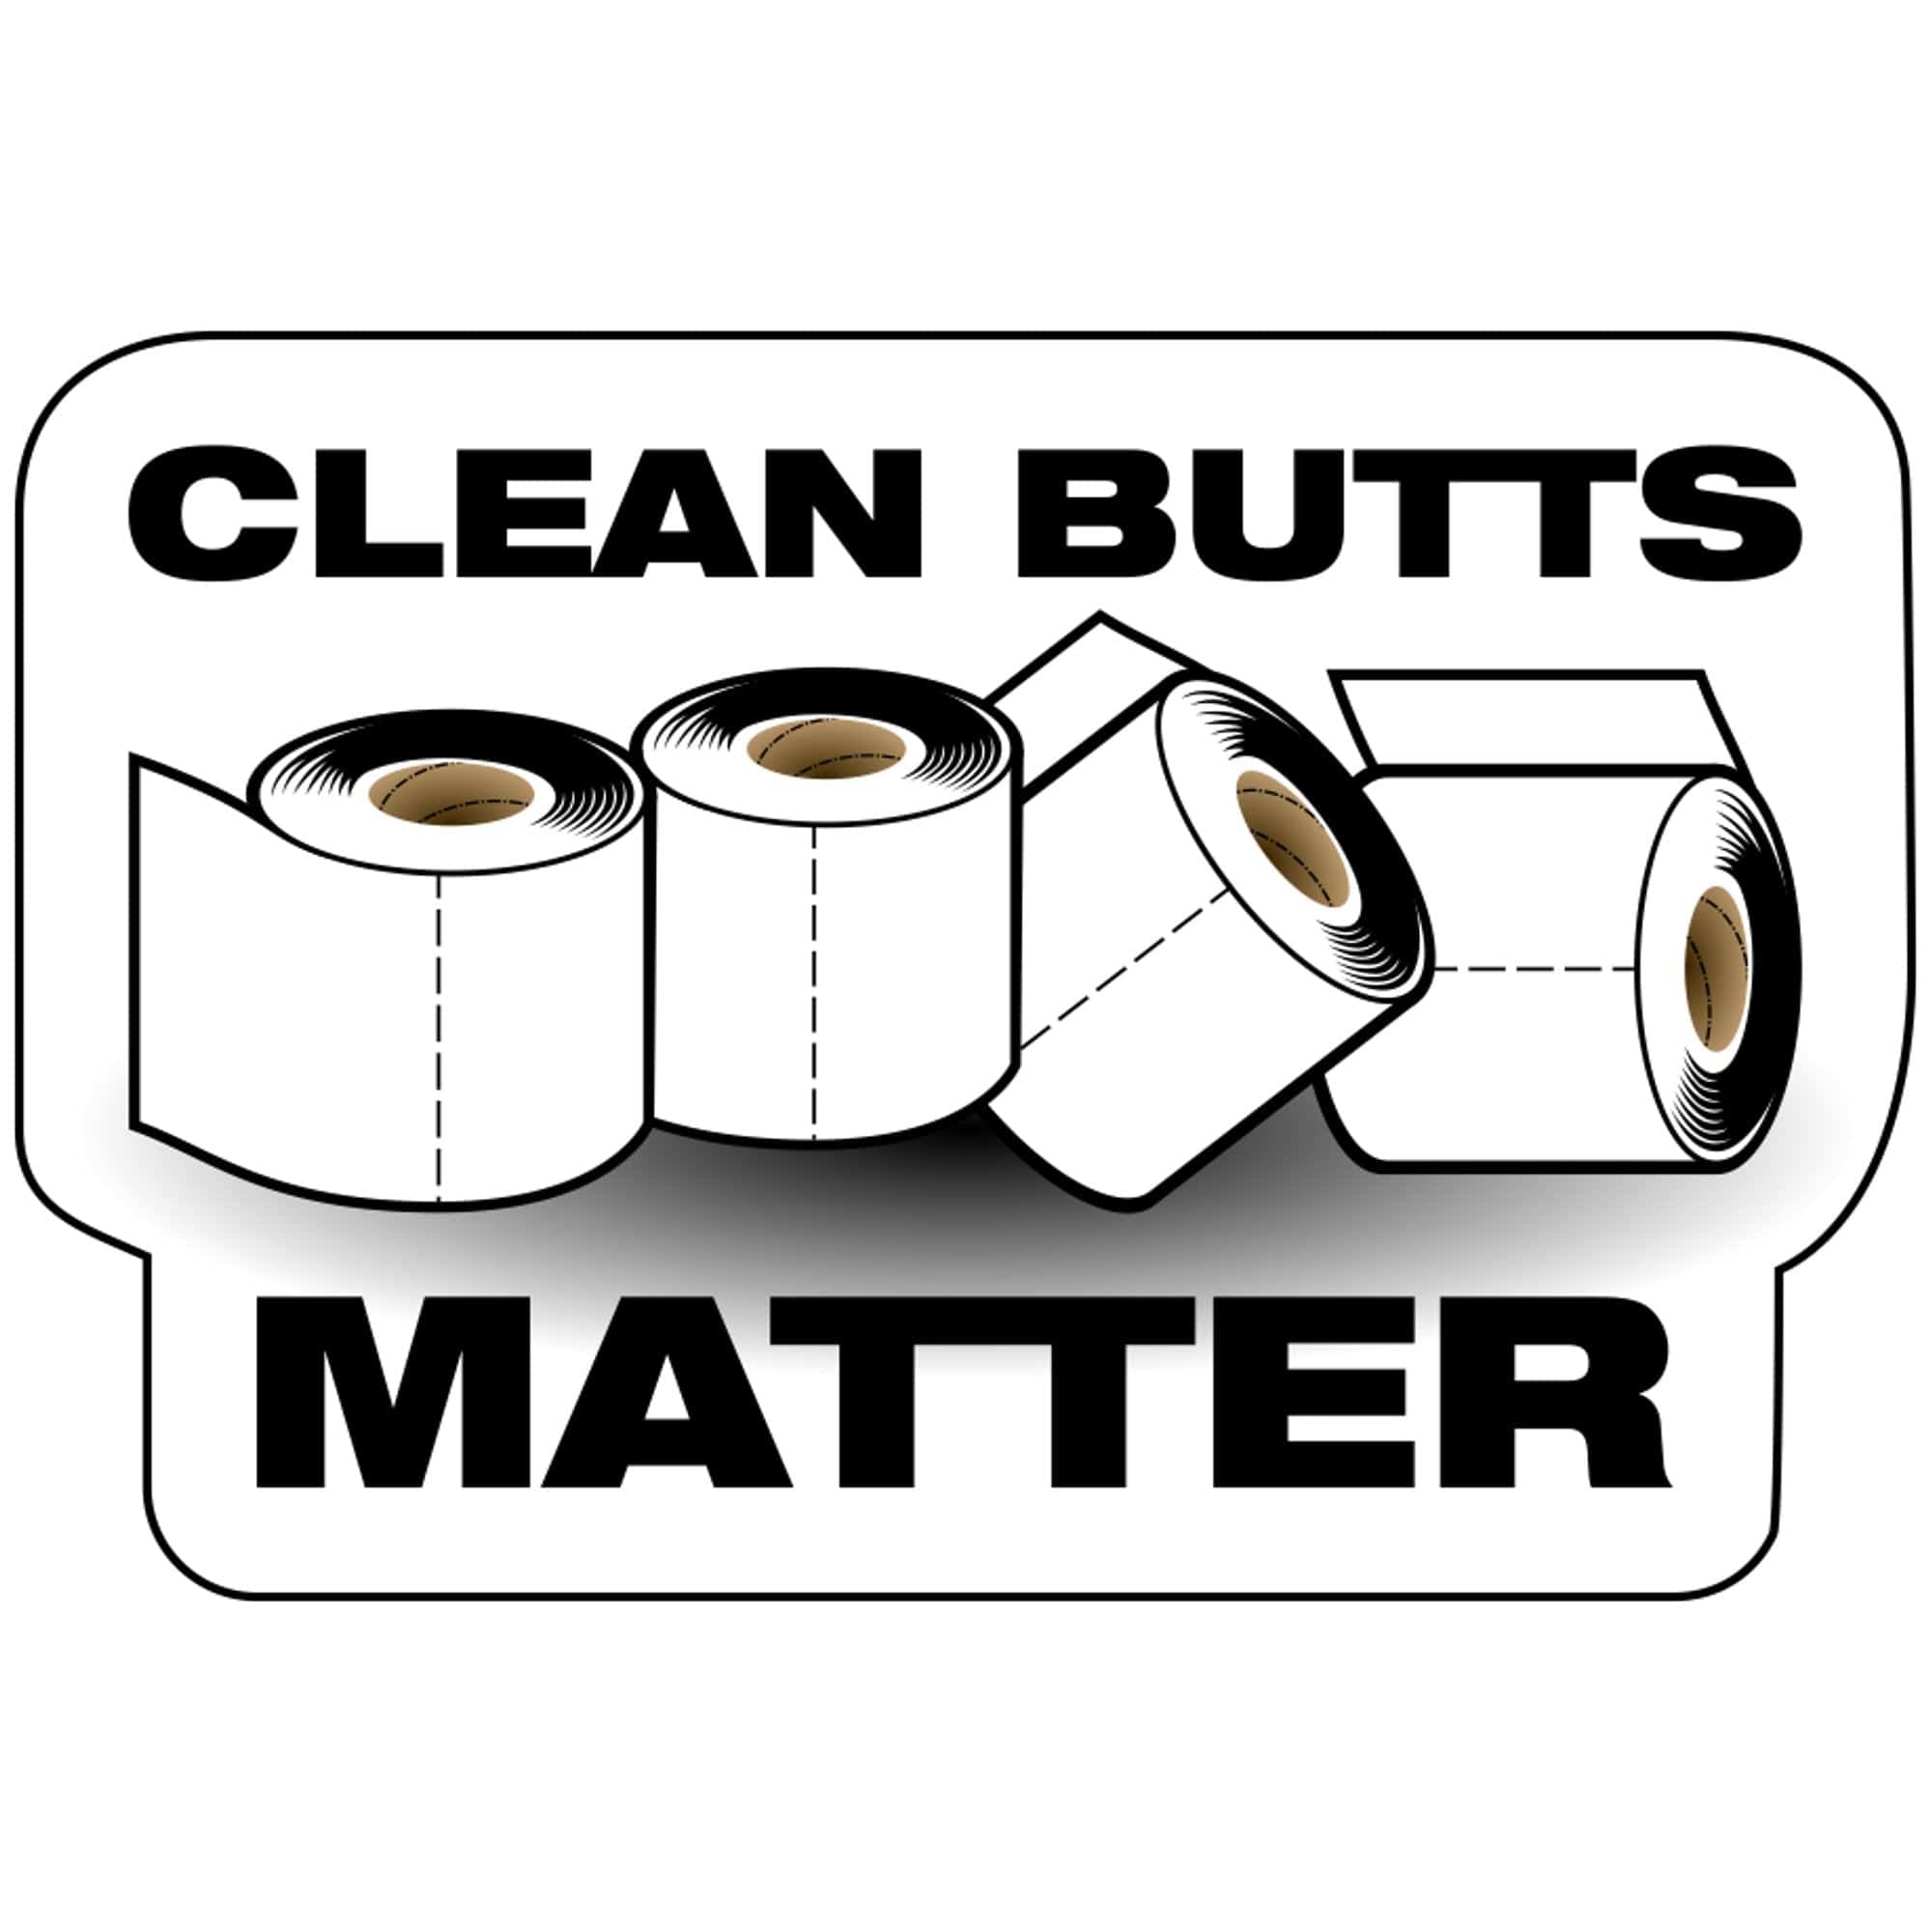 Tactical Gear Junkie Stickers Clean Butts Matter- 2x3 inch Sticker